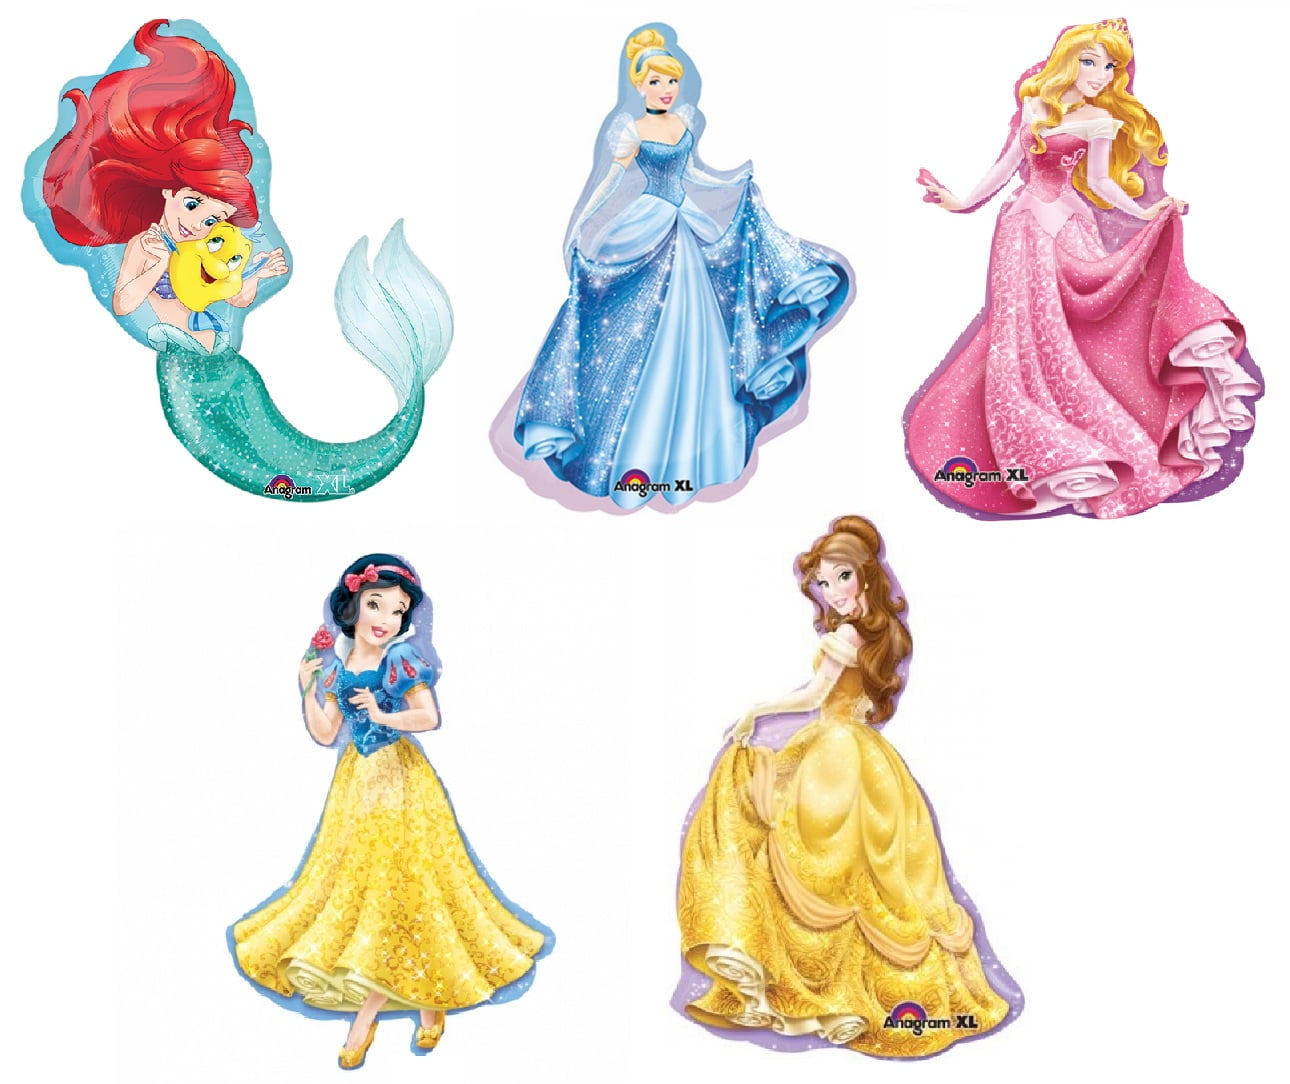 Disney Princess Washi Tape Sticker Frozen Cinderella Mermaid Mickey Mouse  Color tearable decorative stationery 3d sticker Toys - AliExpress